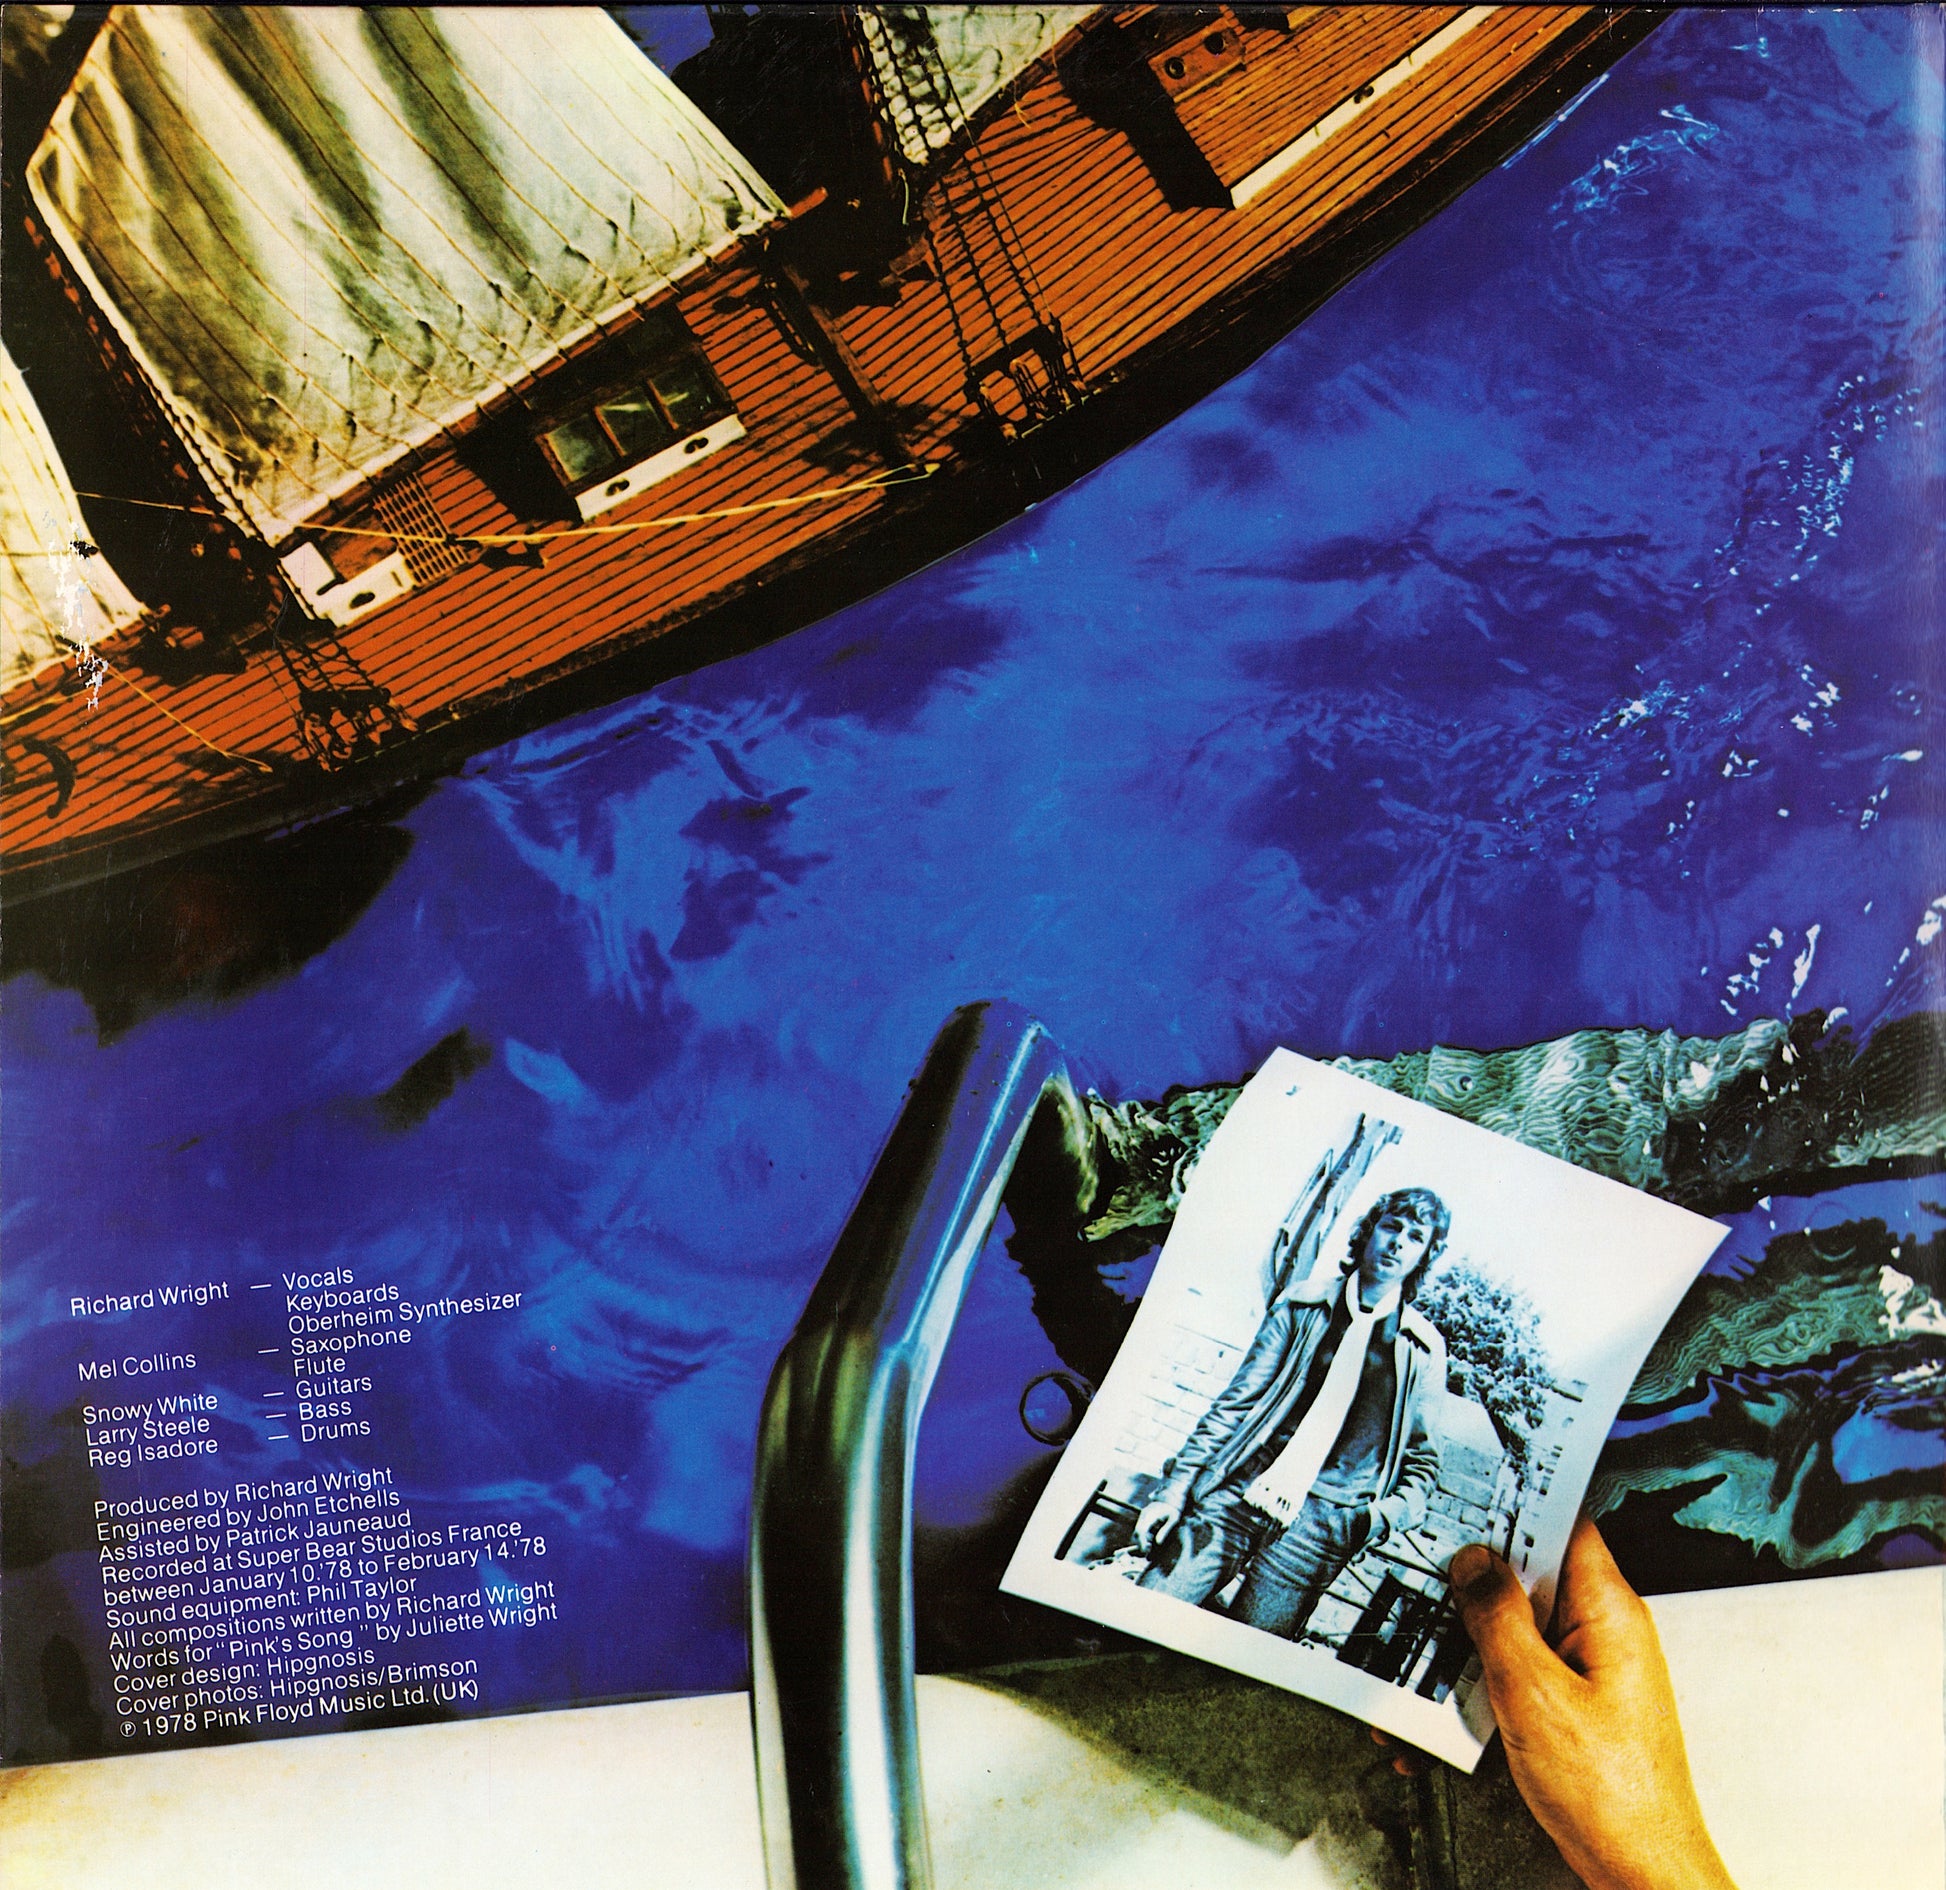 Richard Wright ‎- Wet Dream Vinyl LP